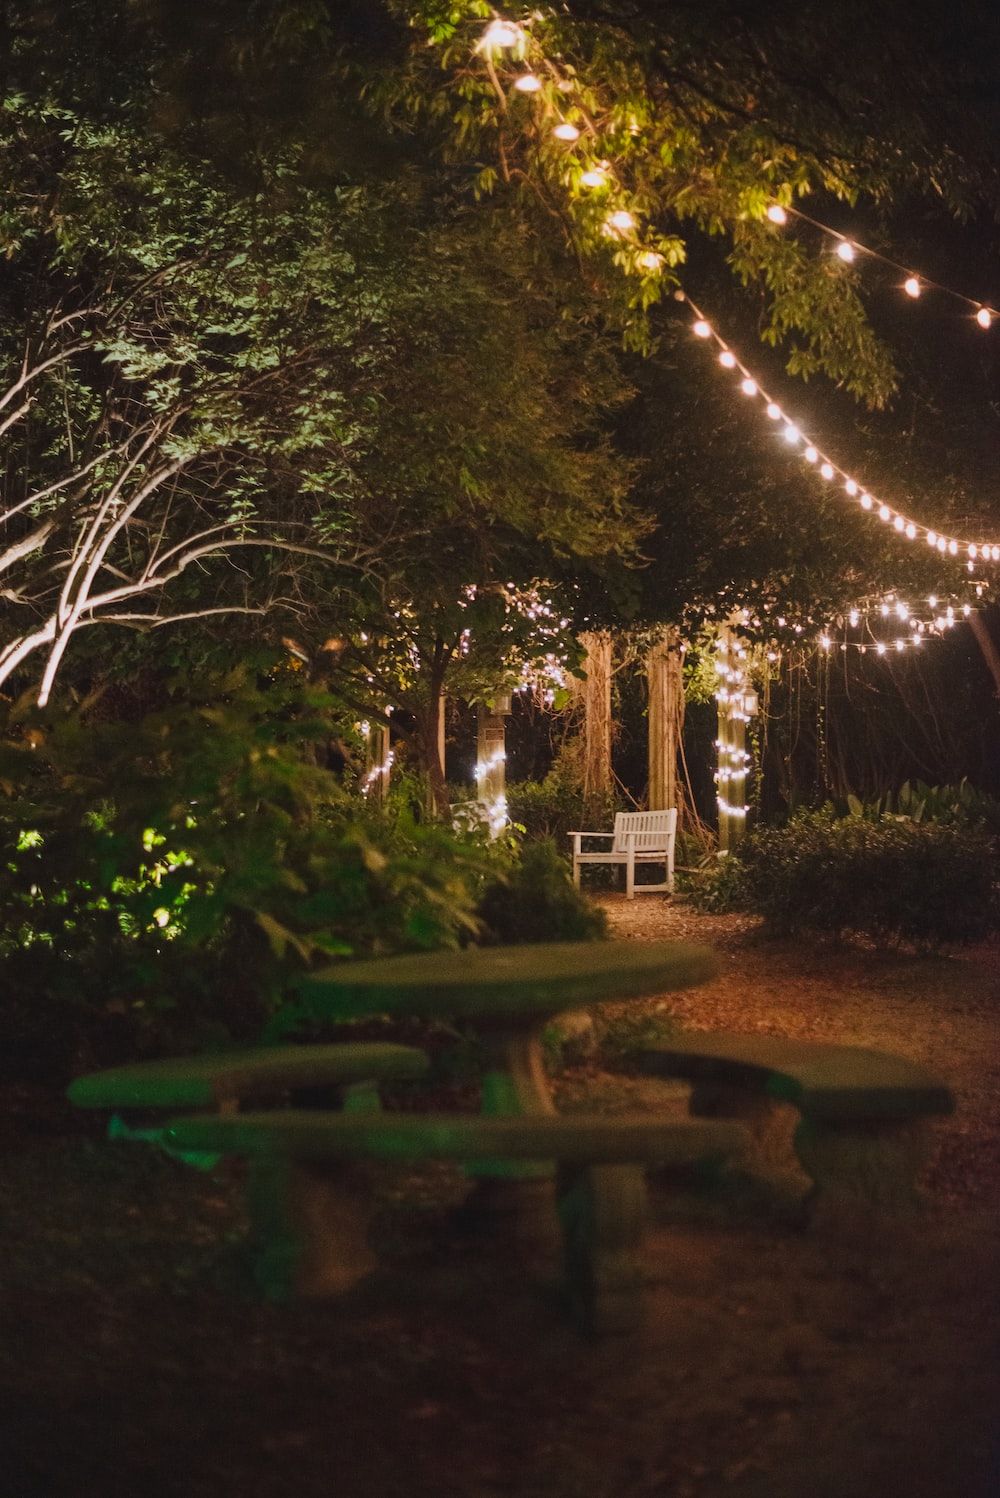 A bench under a string of lights in a garden. - Fairy lights